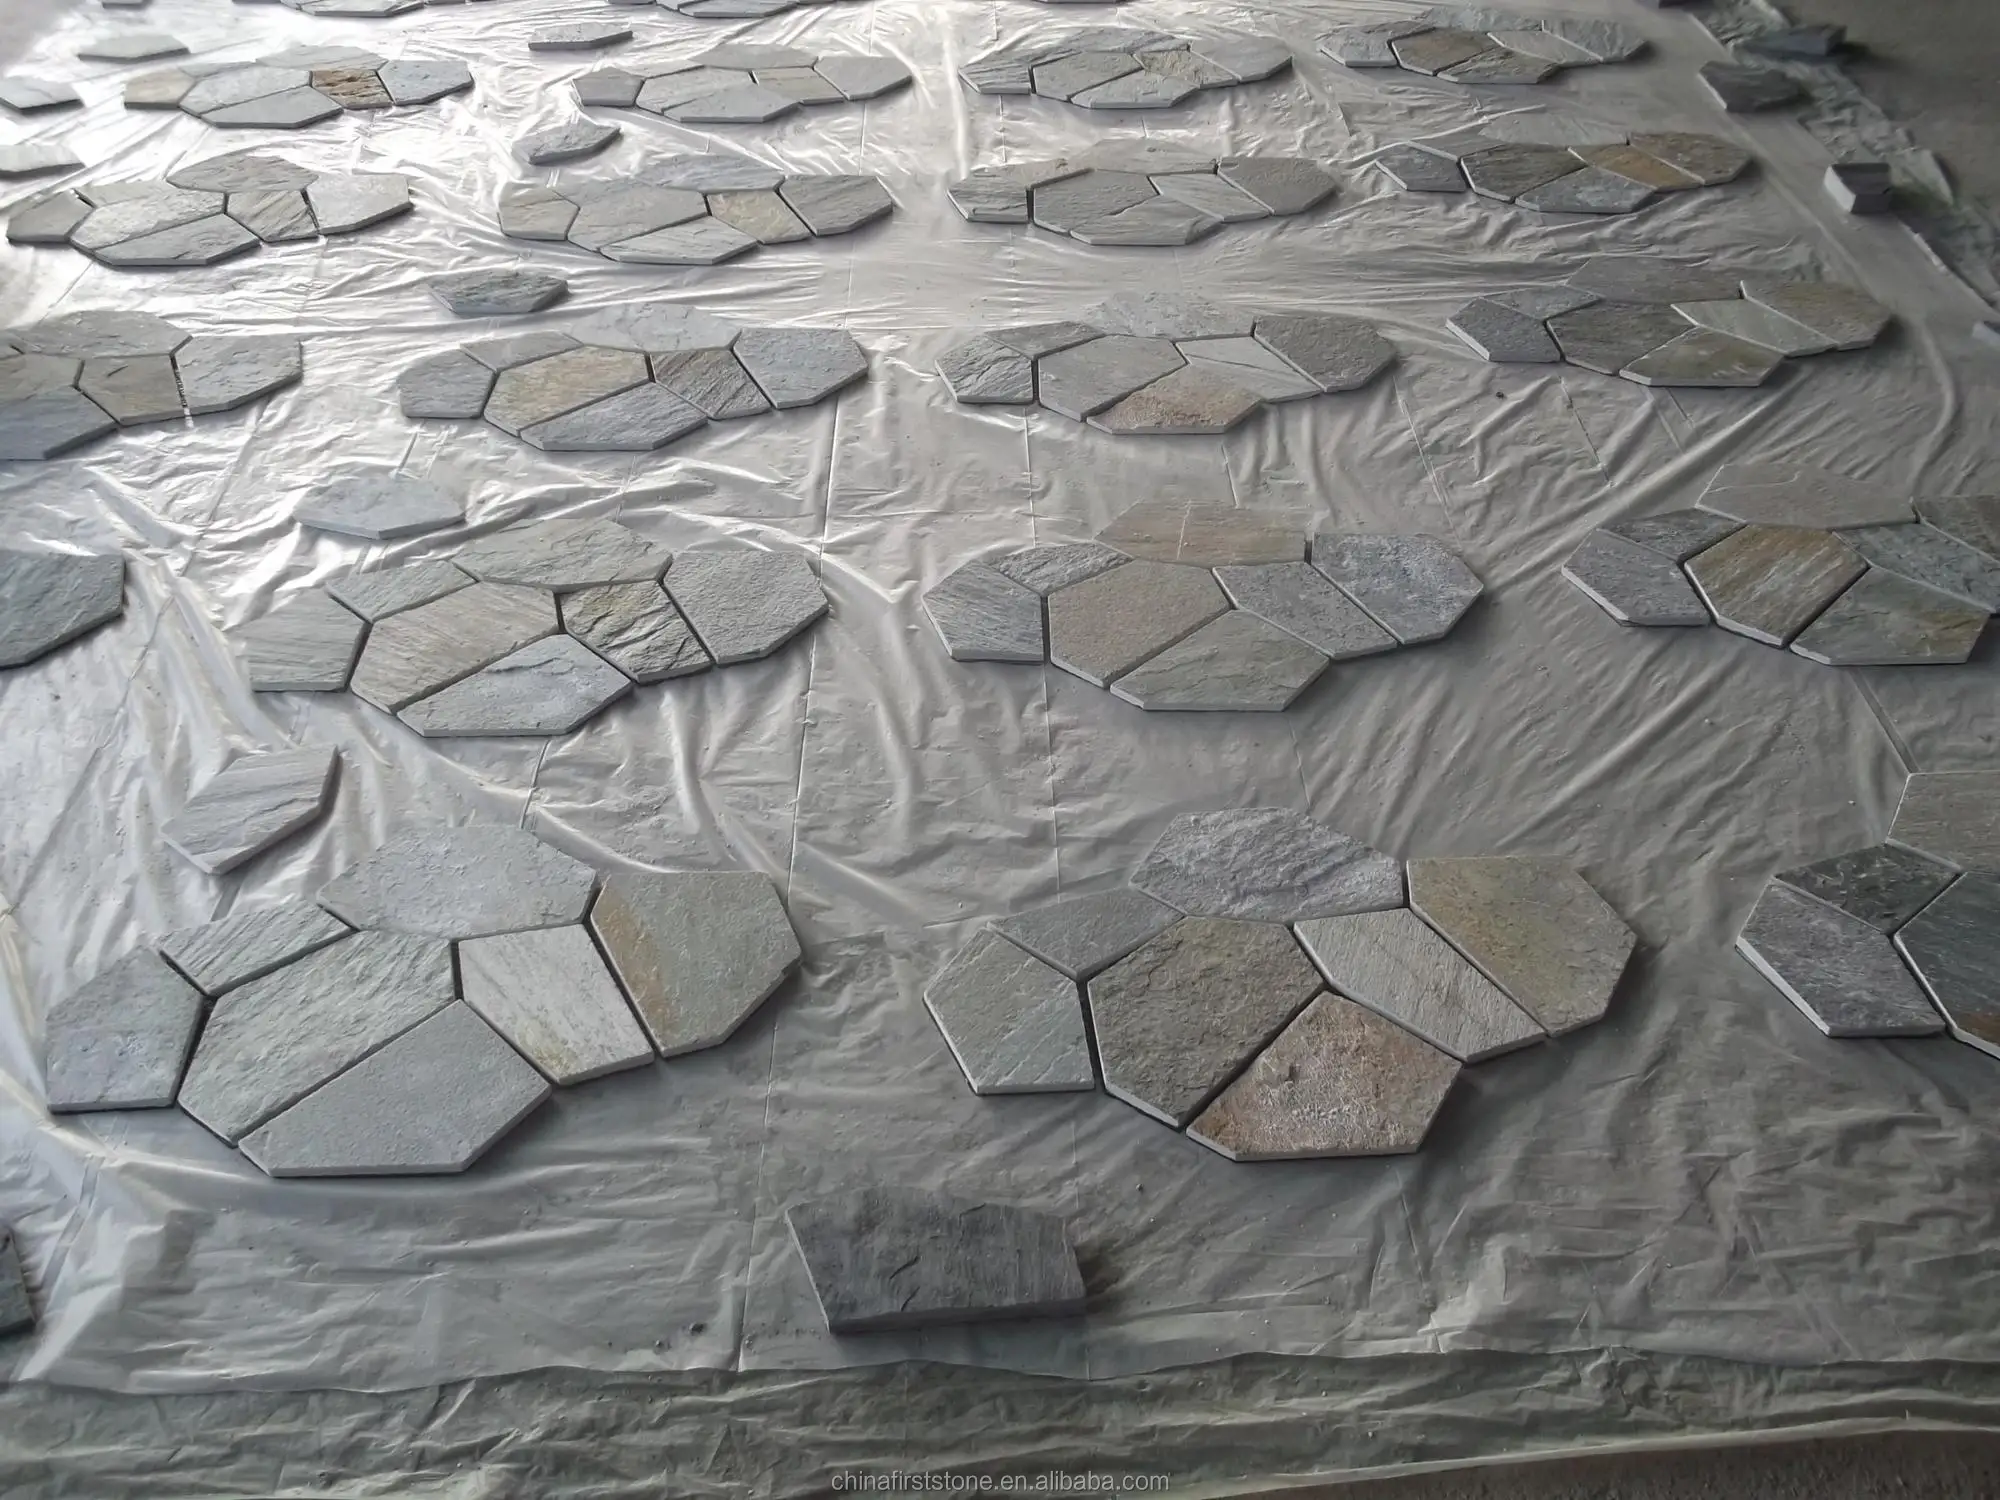 FSGG002 Exterior Granite Interlocking Stone Tile Meshed Pavers for Pavement